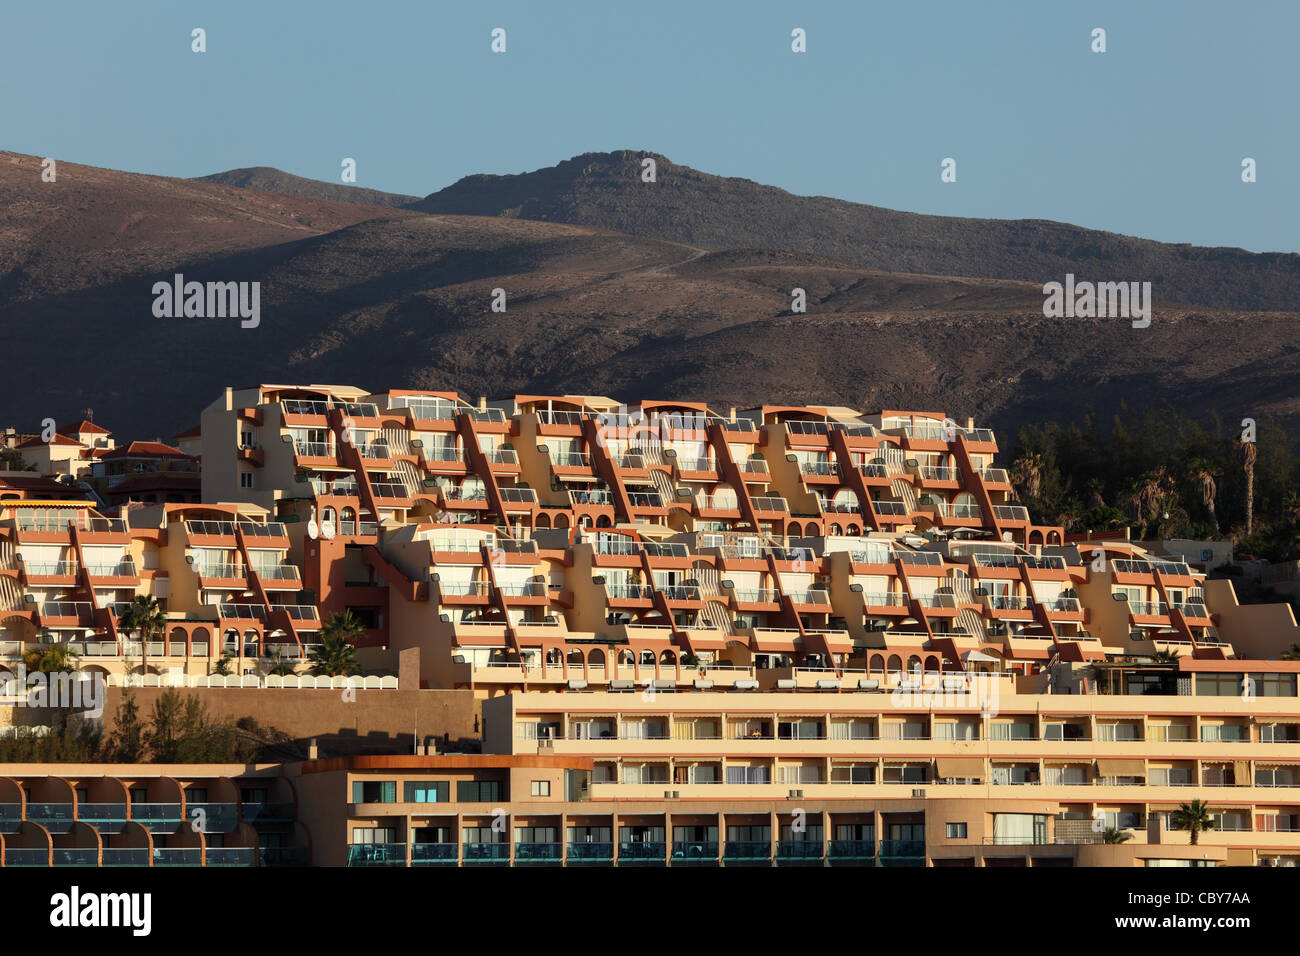 Hotel building on Canary Island Fuerteventura, Spain Stock Photo